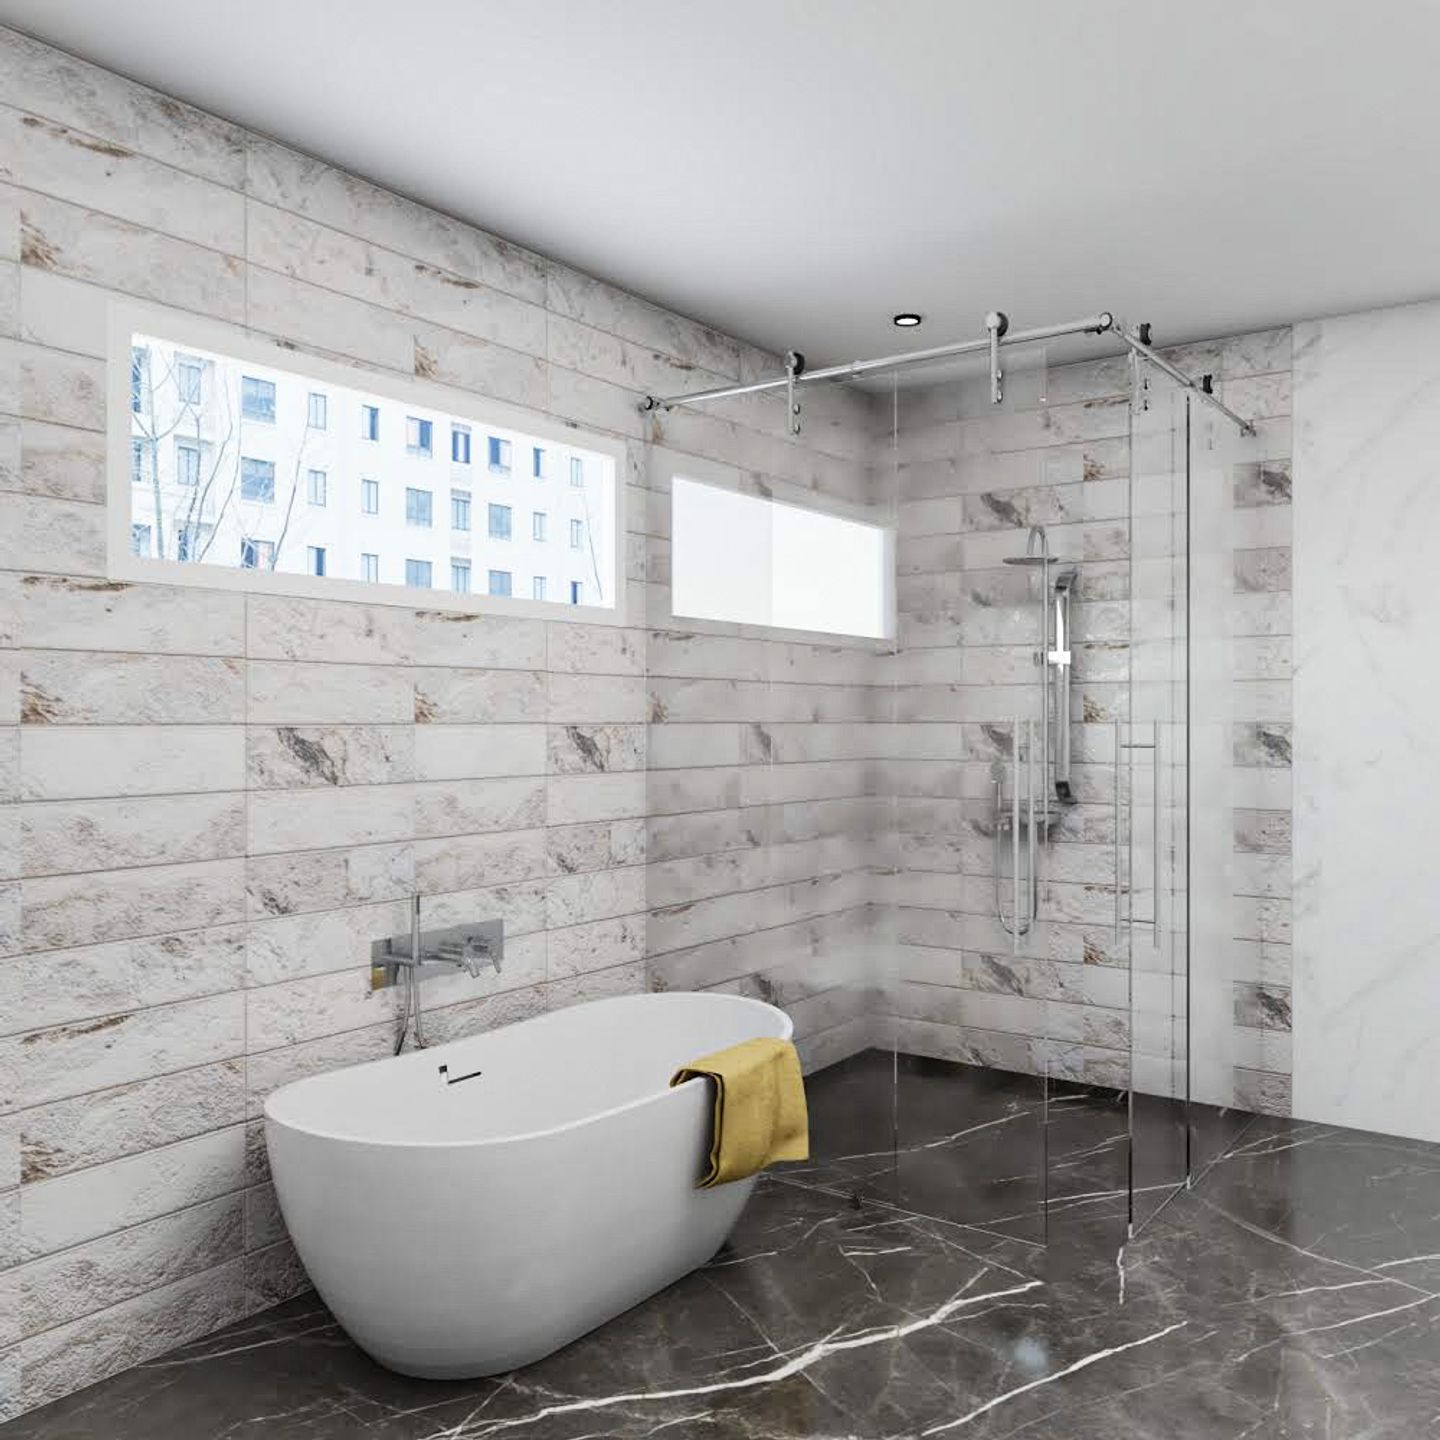 Bathroom Design With Bathtub And Rectangular Wall Tiles - Livspace